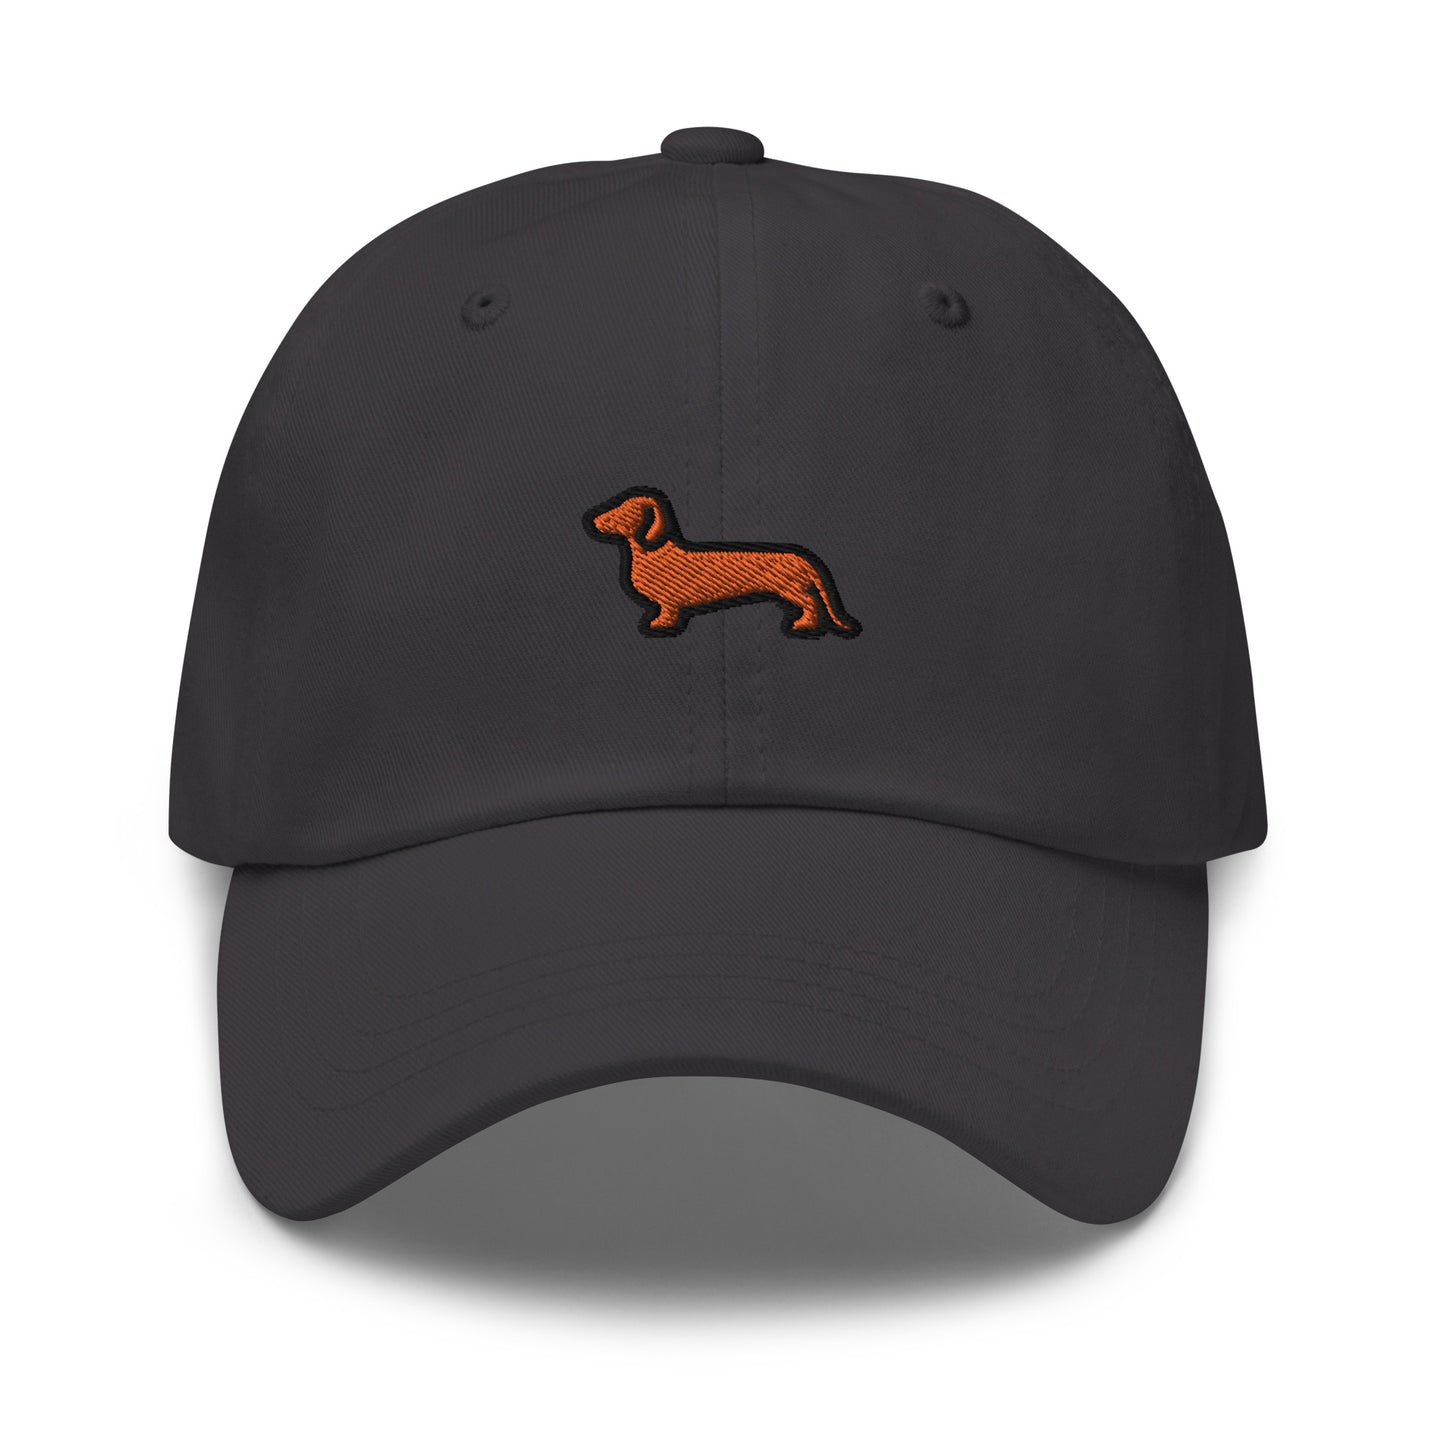 Dachshund Dog Embroidered Baseball Cap